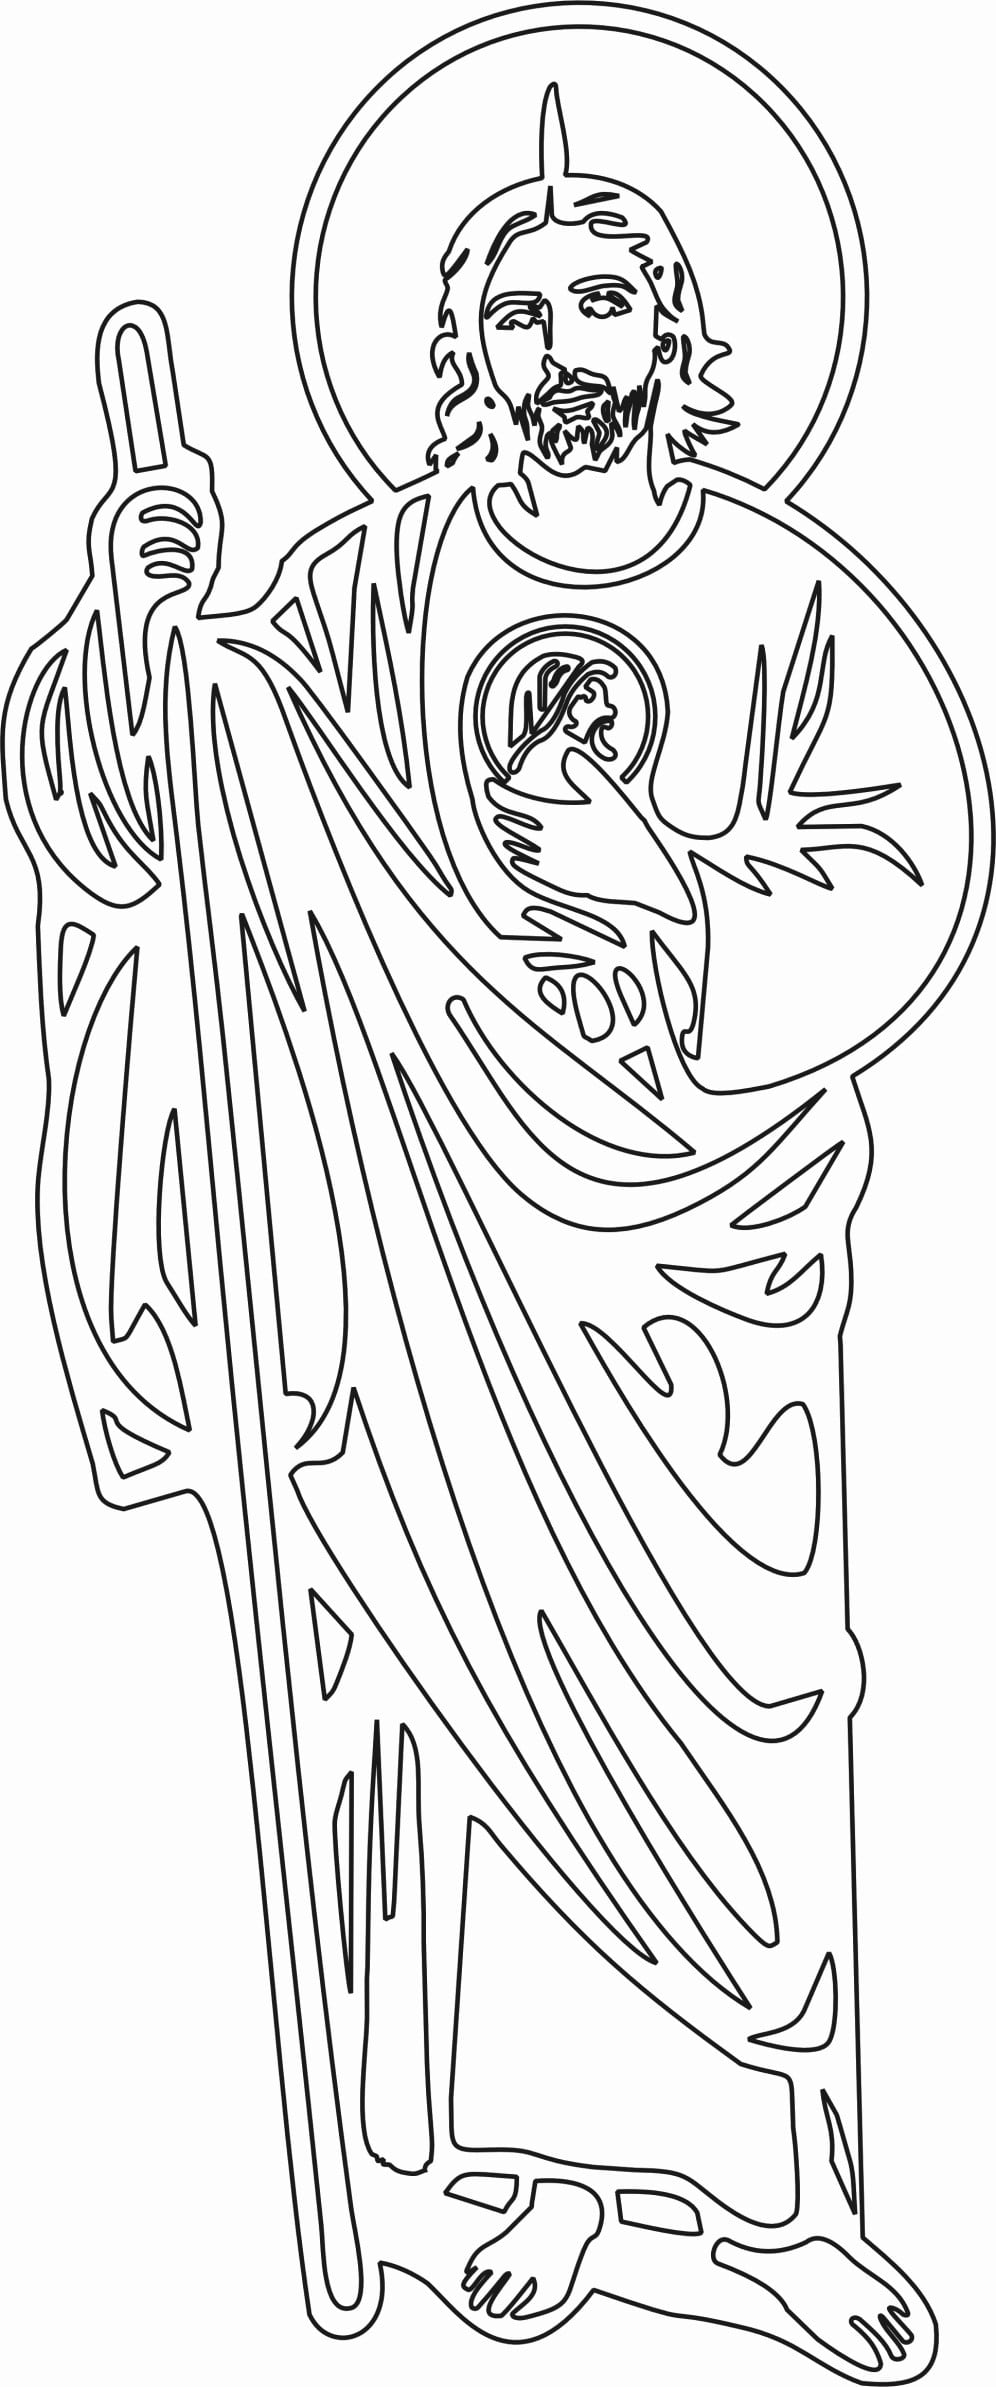 San Judas Tadeo Black And White Sketch Coloring Page